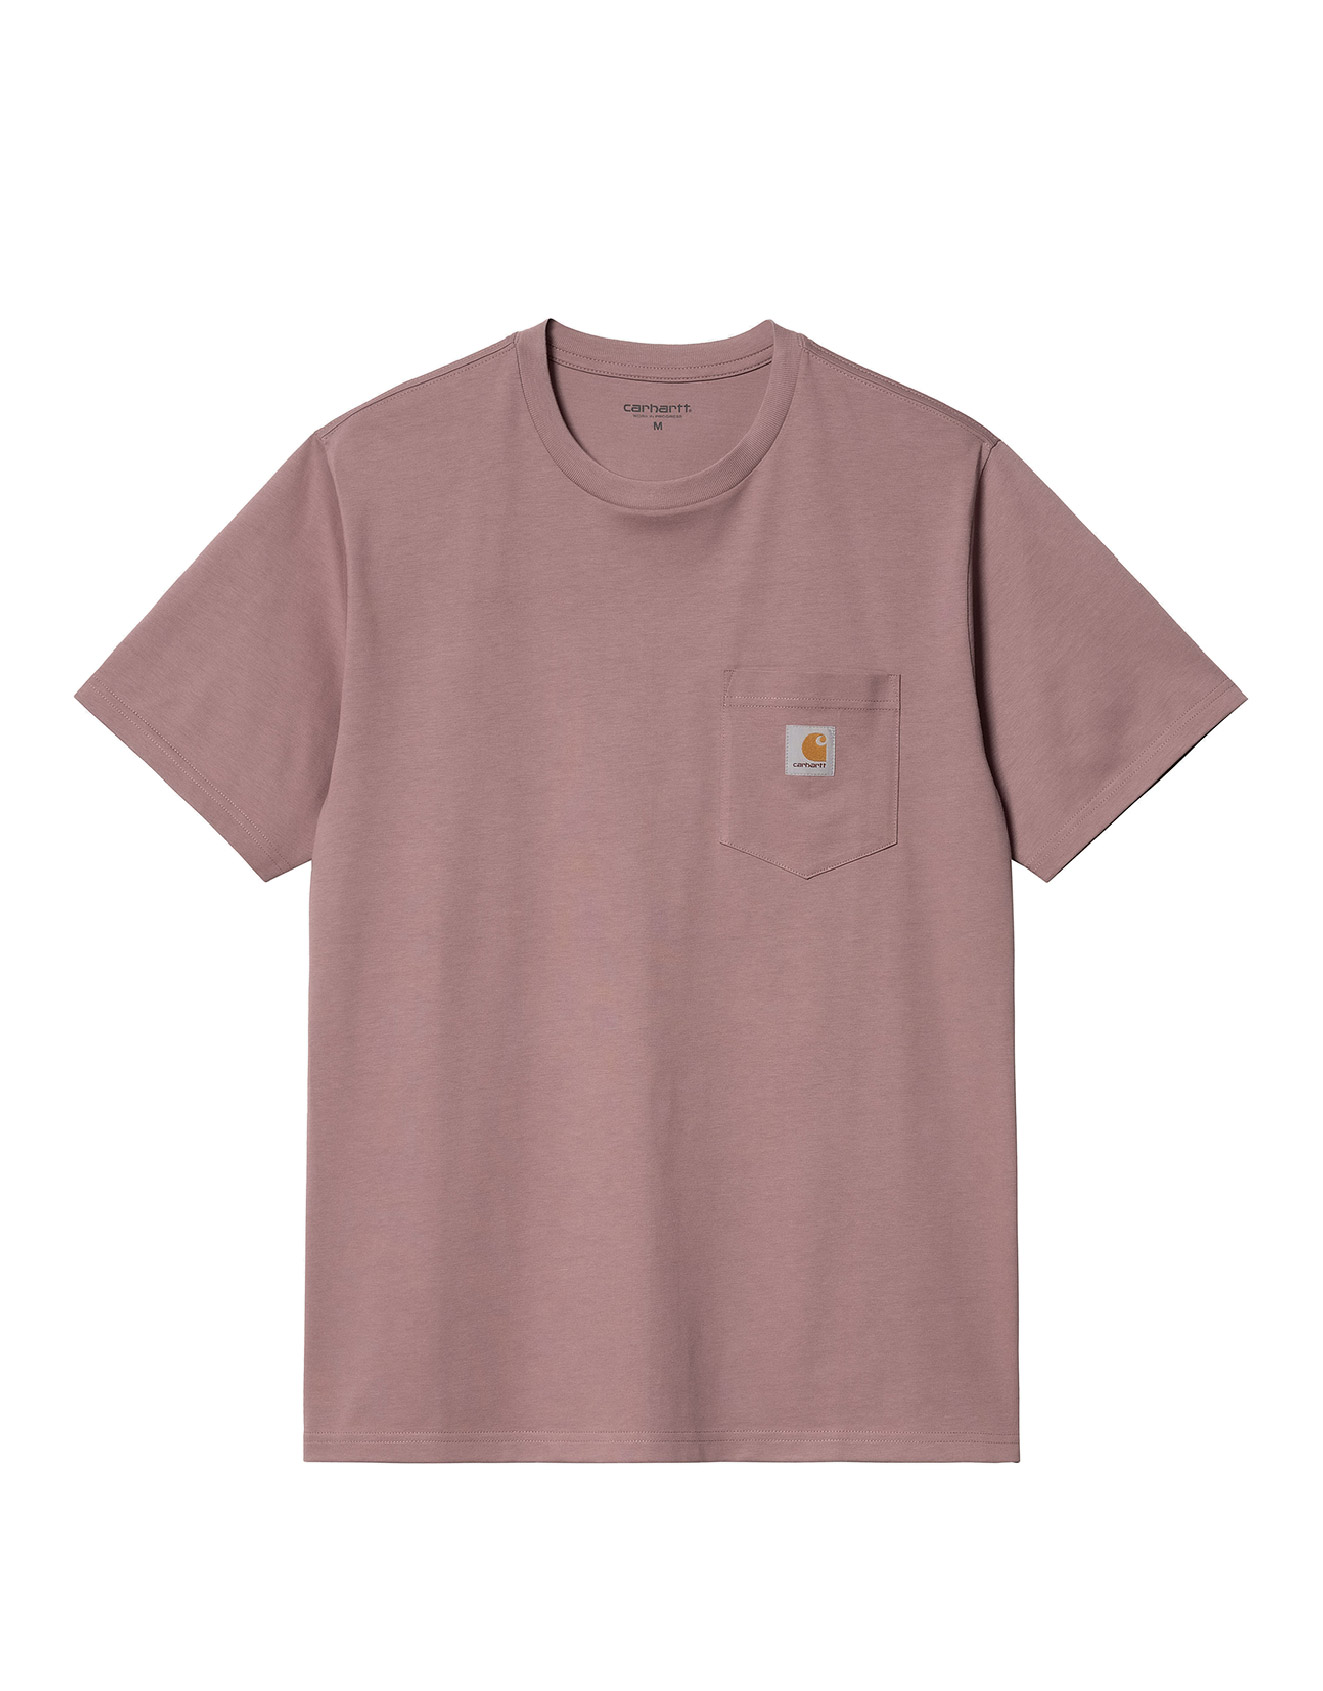 Carhartt WIP – S/S Pocket T-Shirt